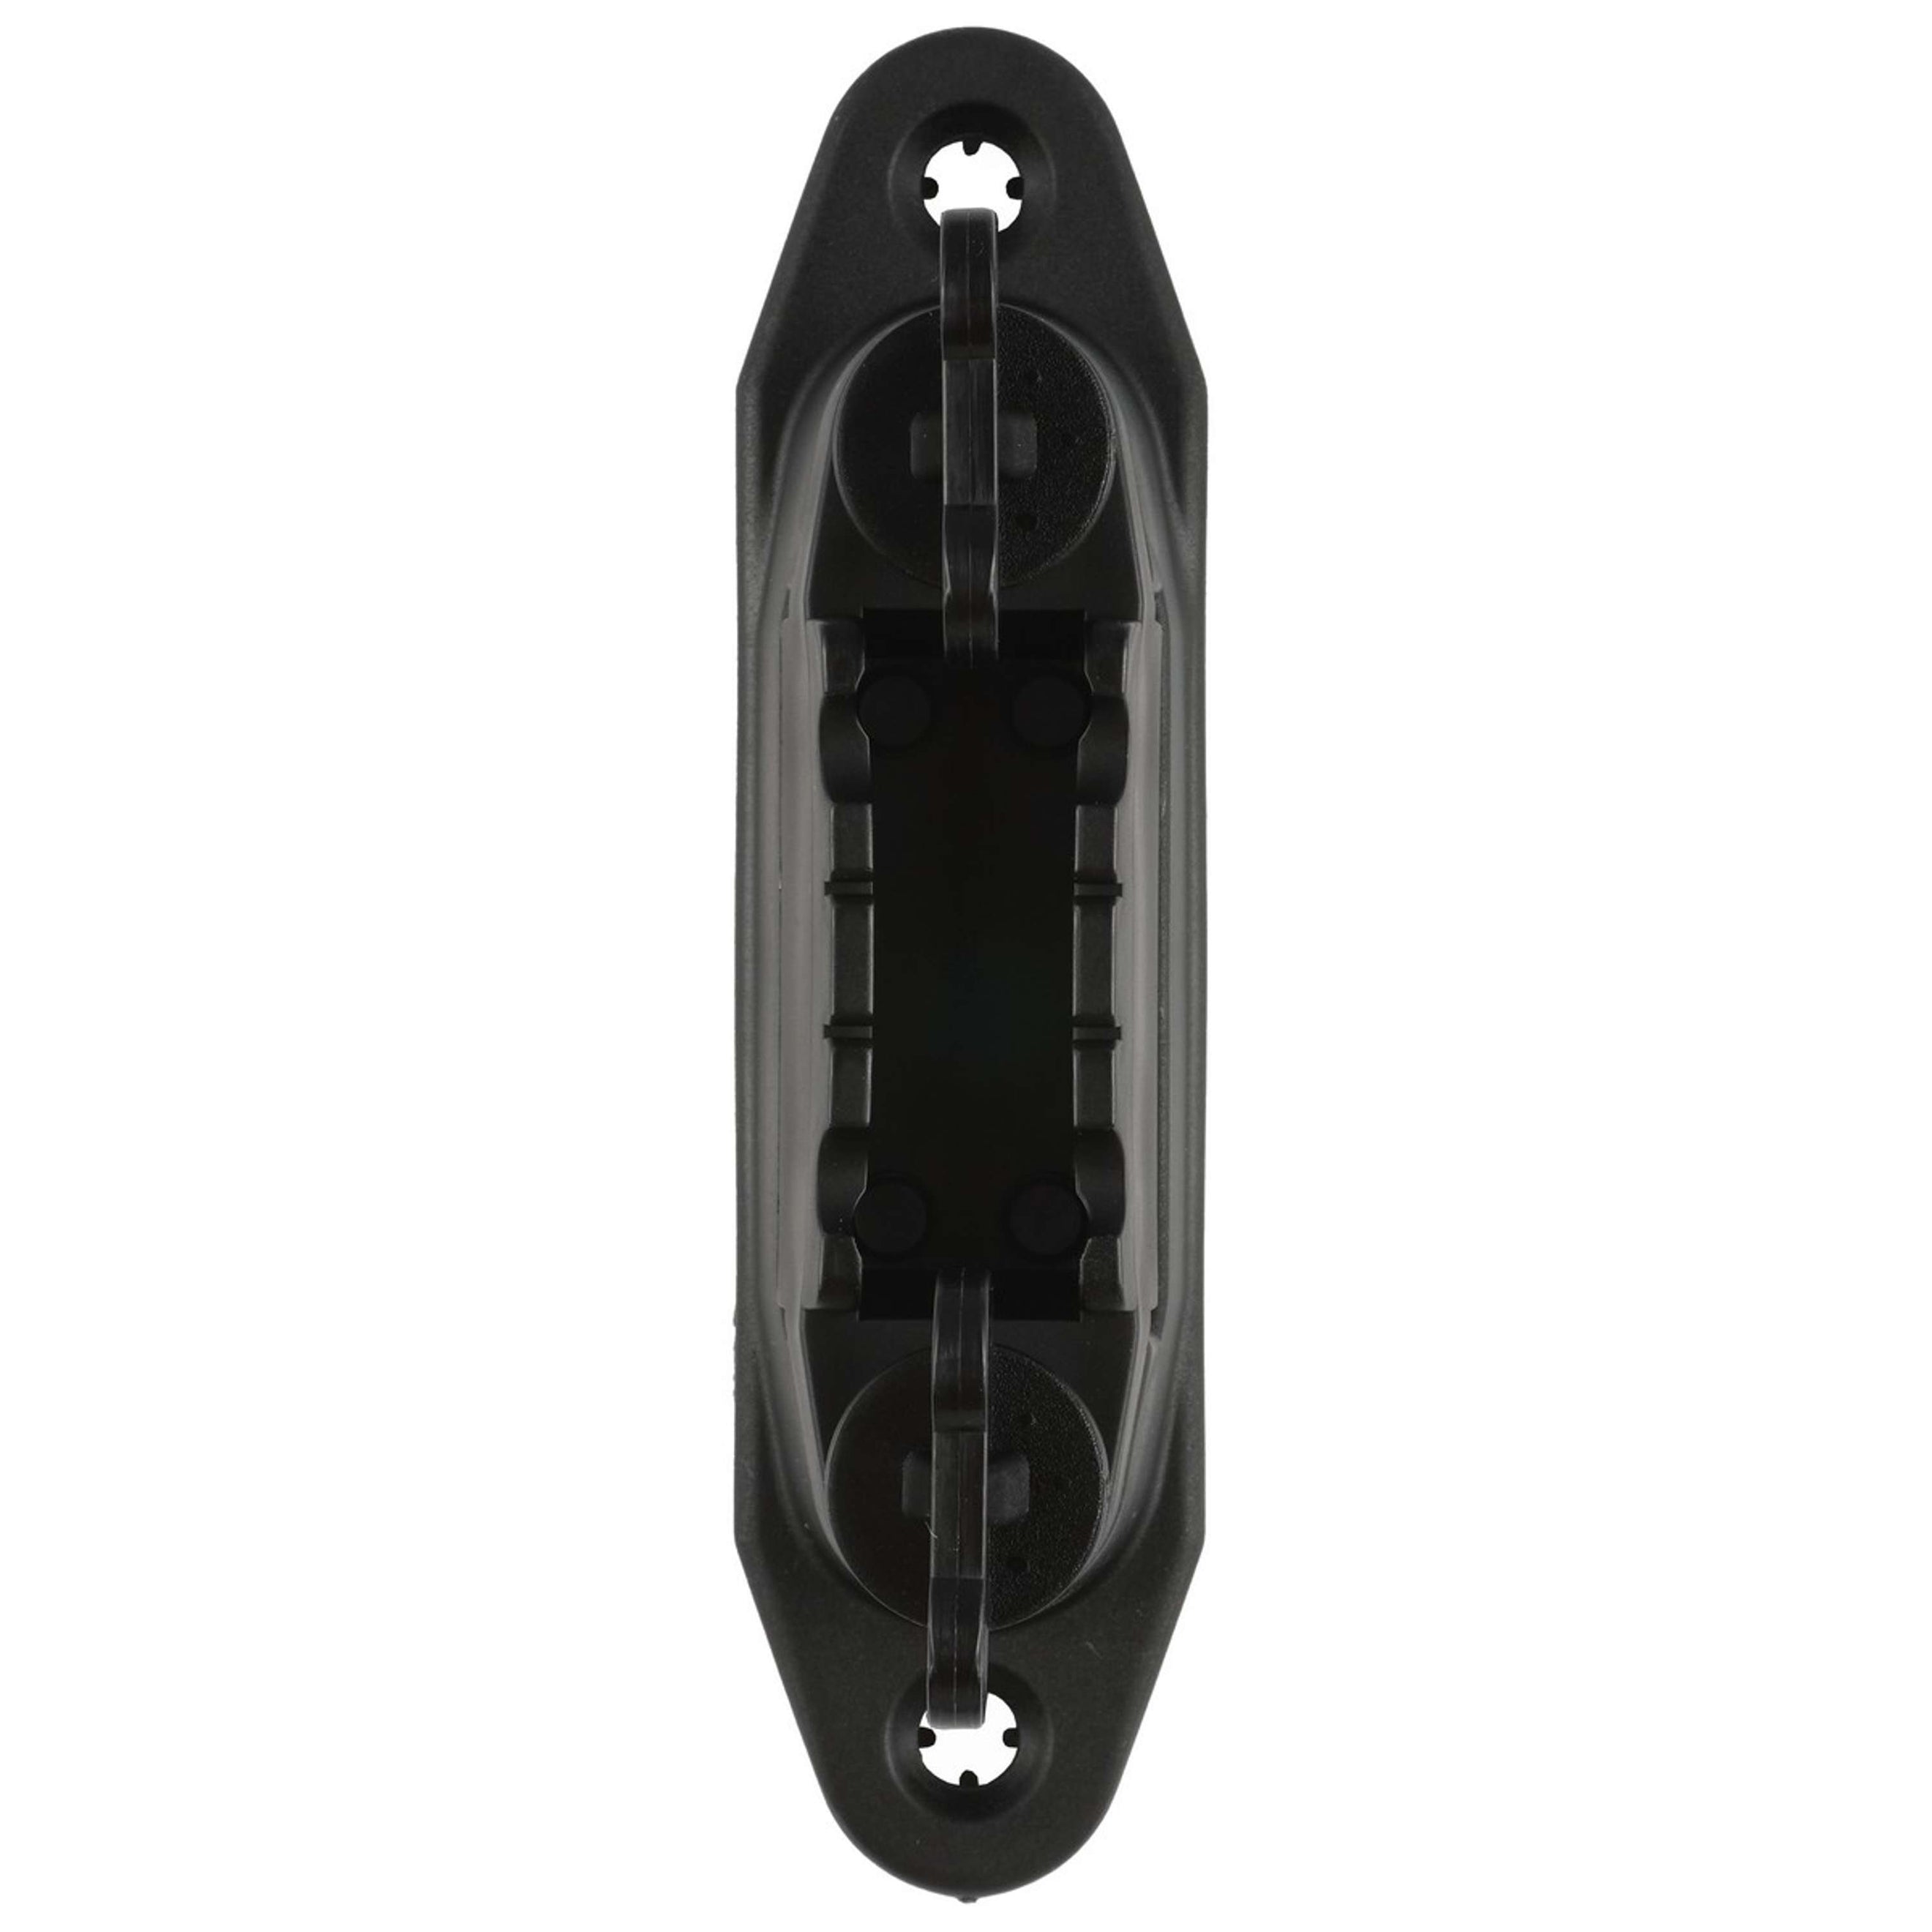 Agradi Power Pince Profi isolateur (d'angle) Noir